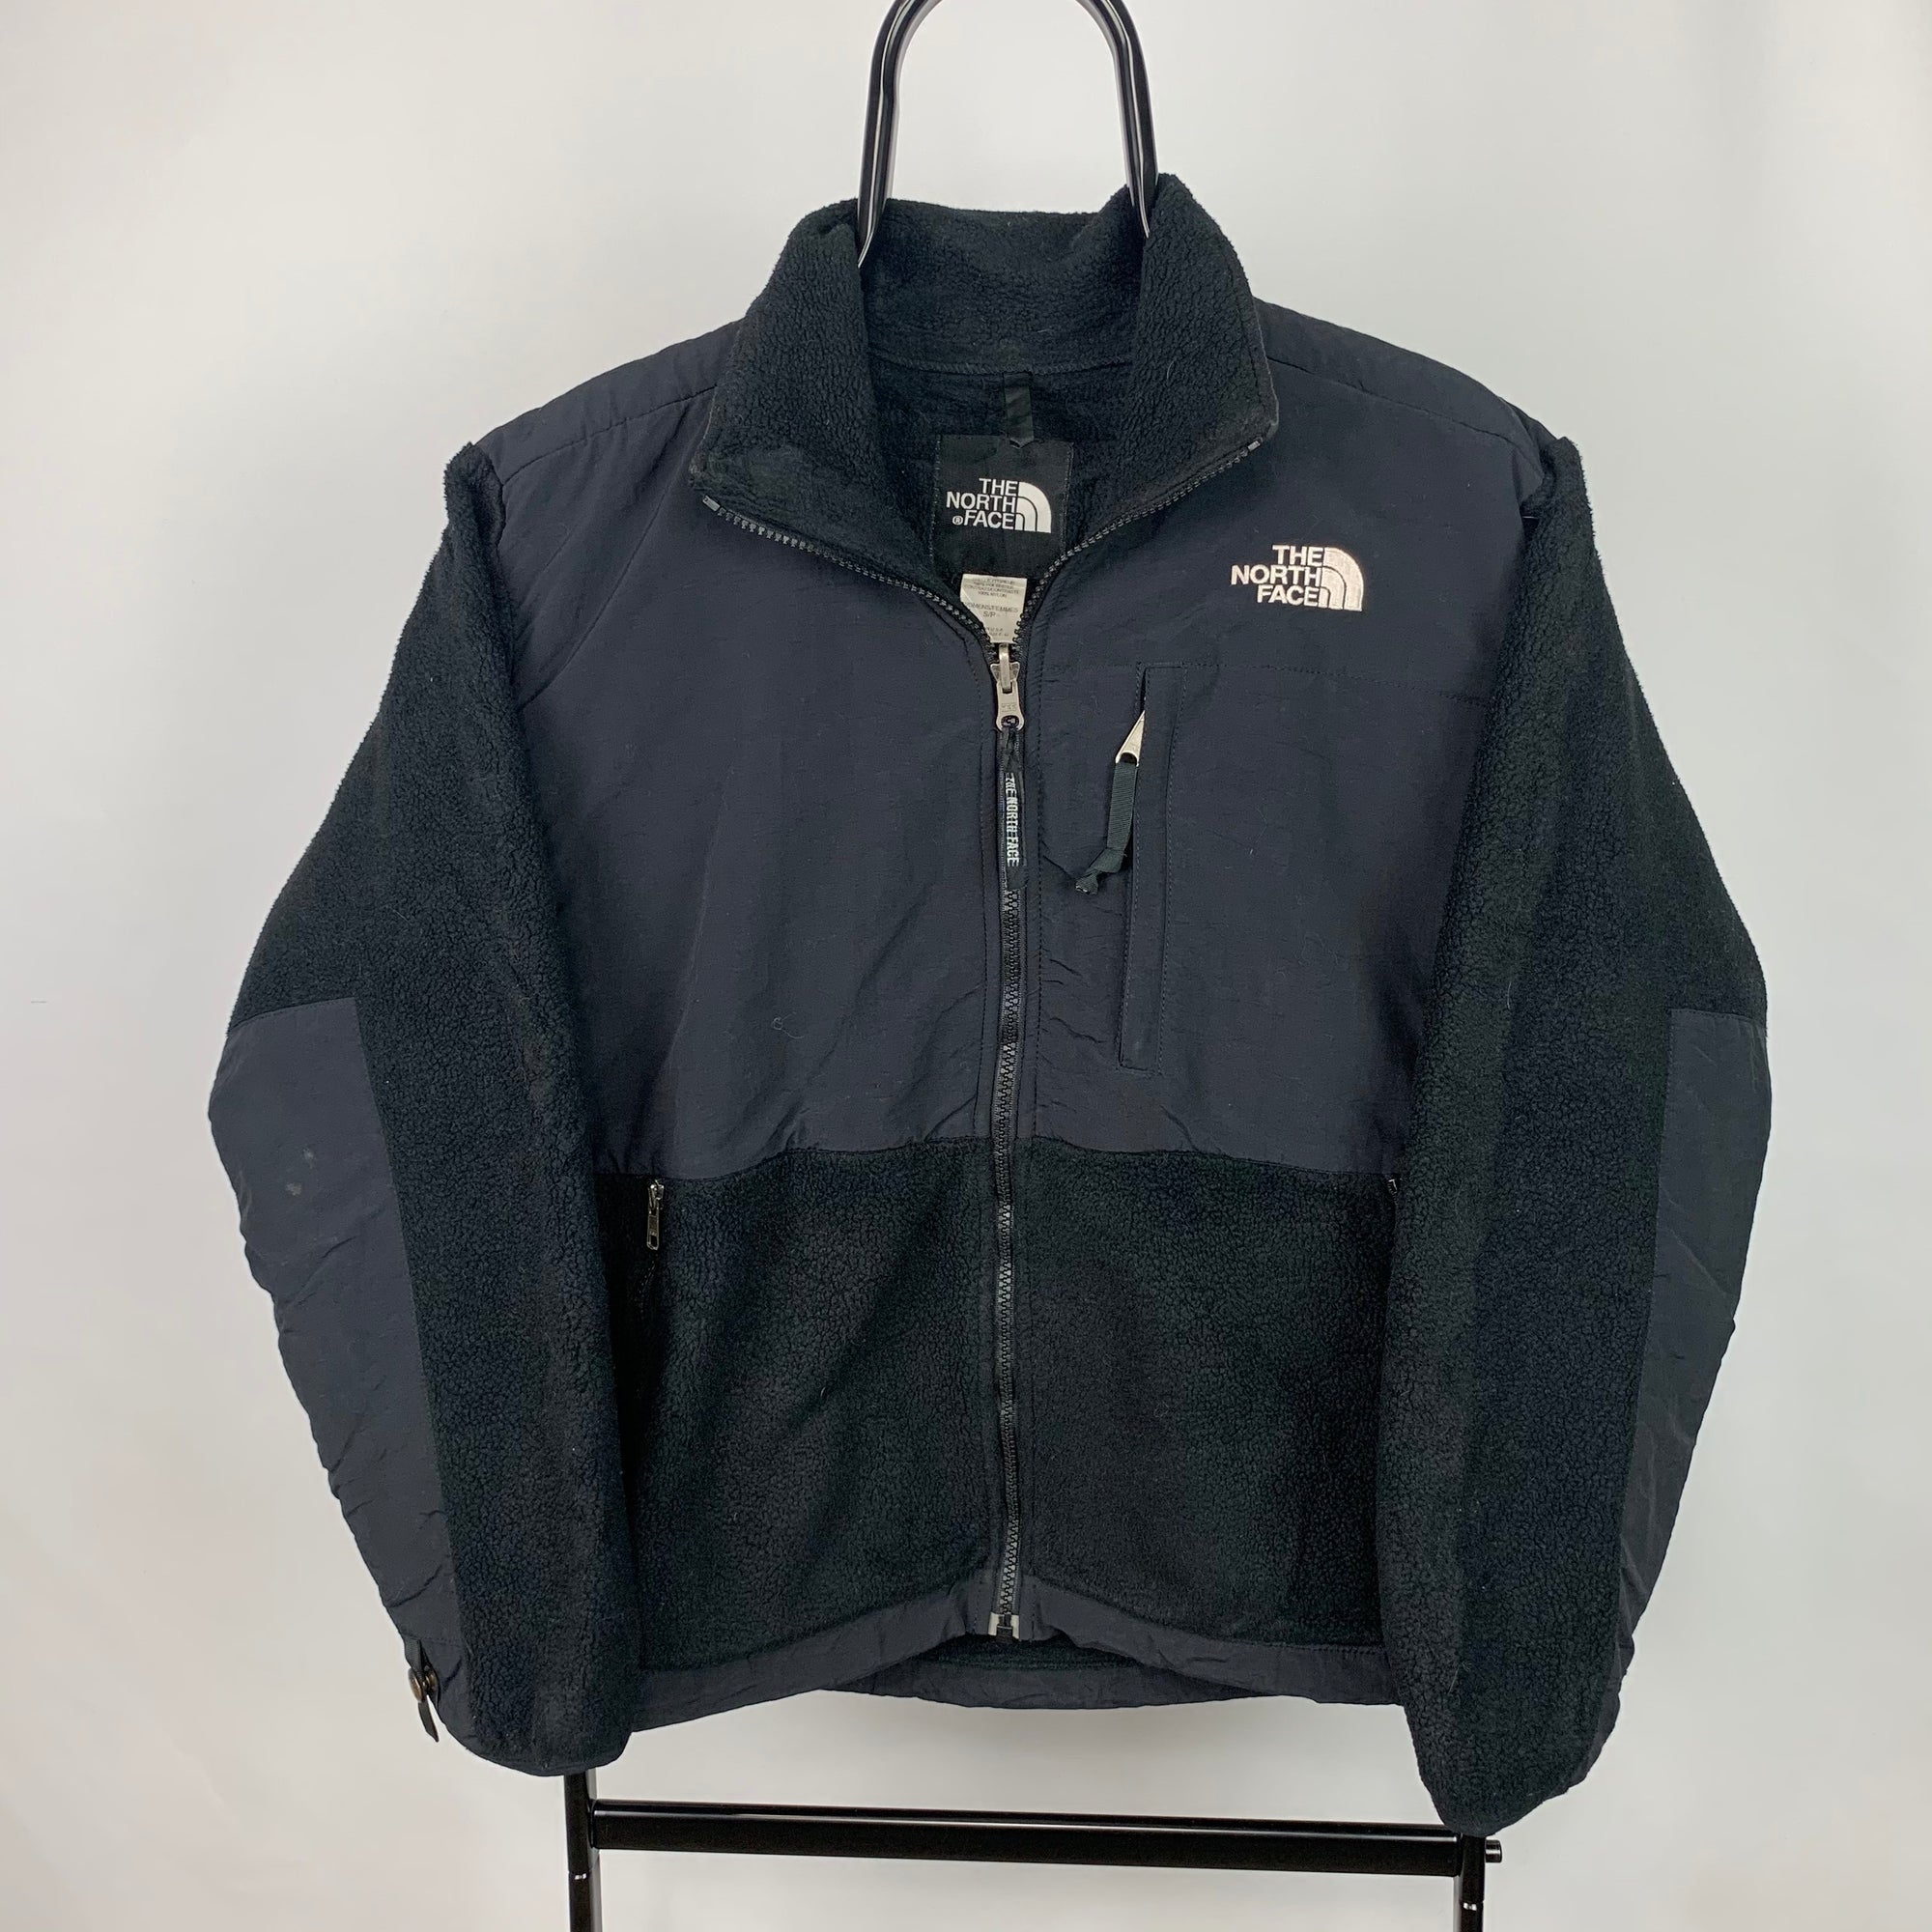 Vintage North Face Fleece Jacket - Men's Small/Women's Medium